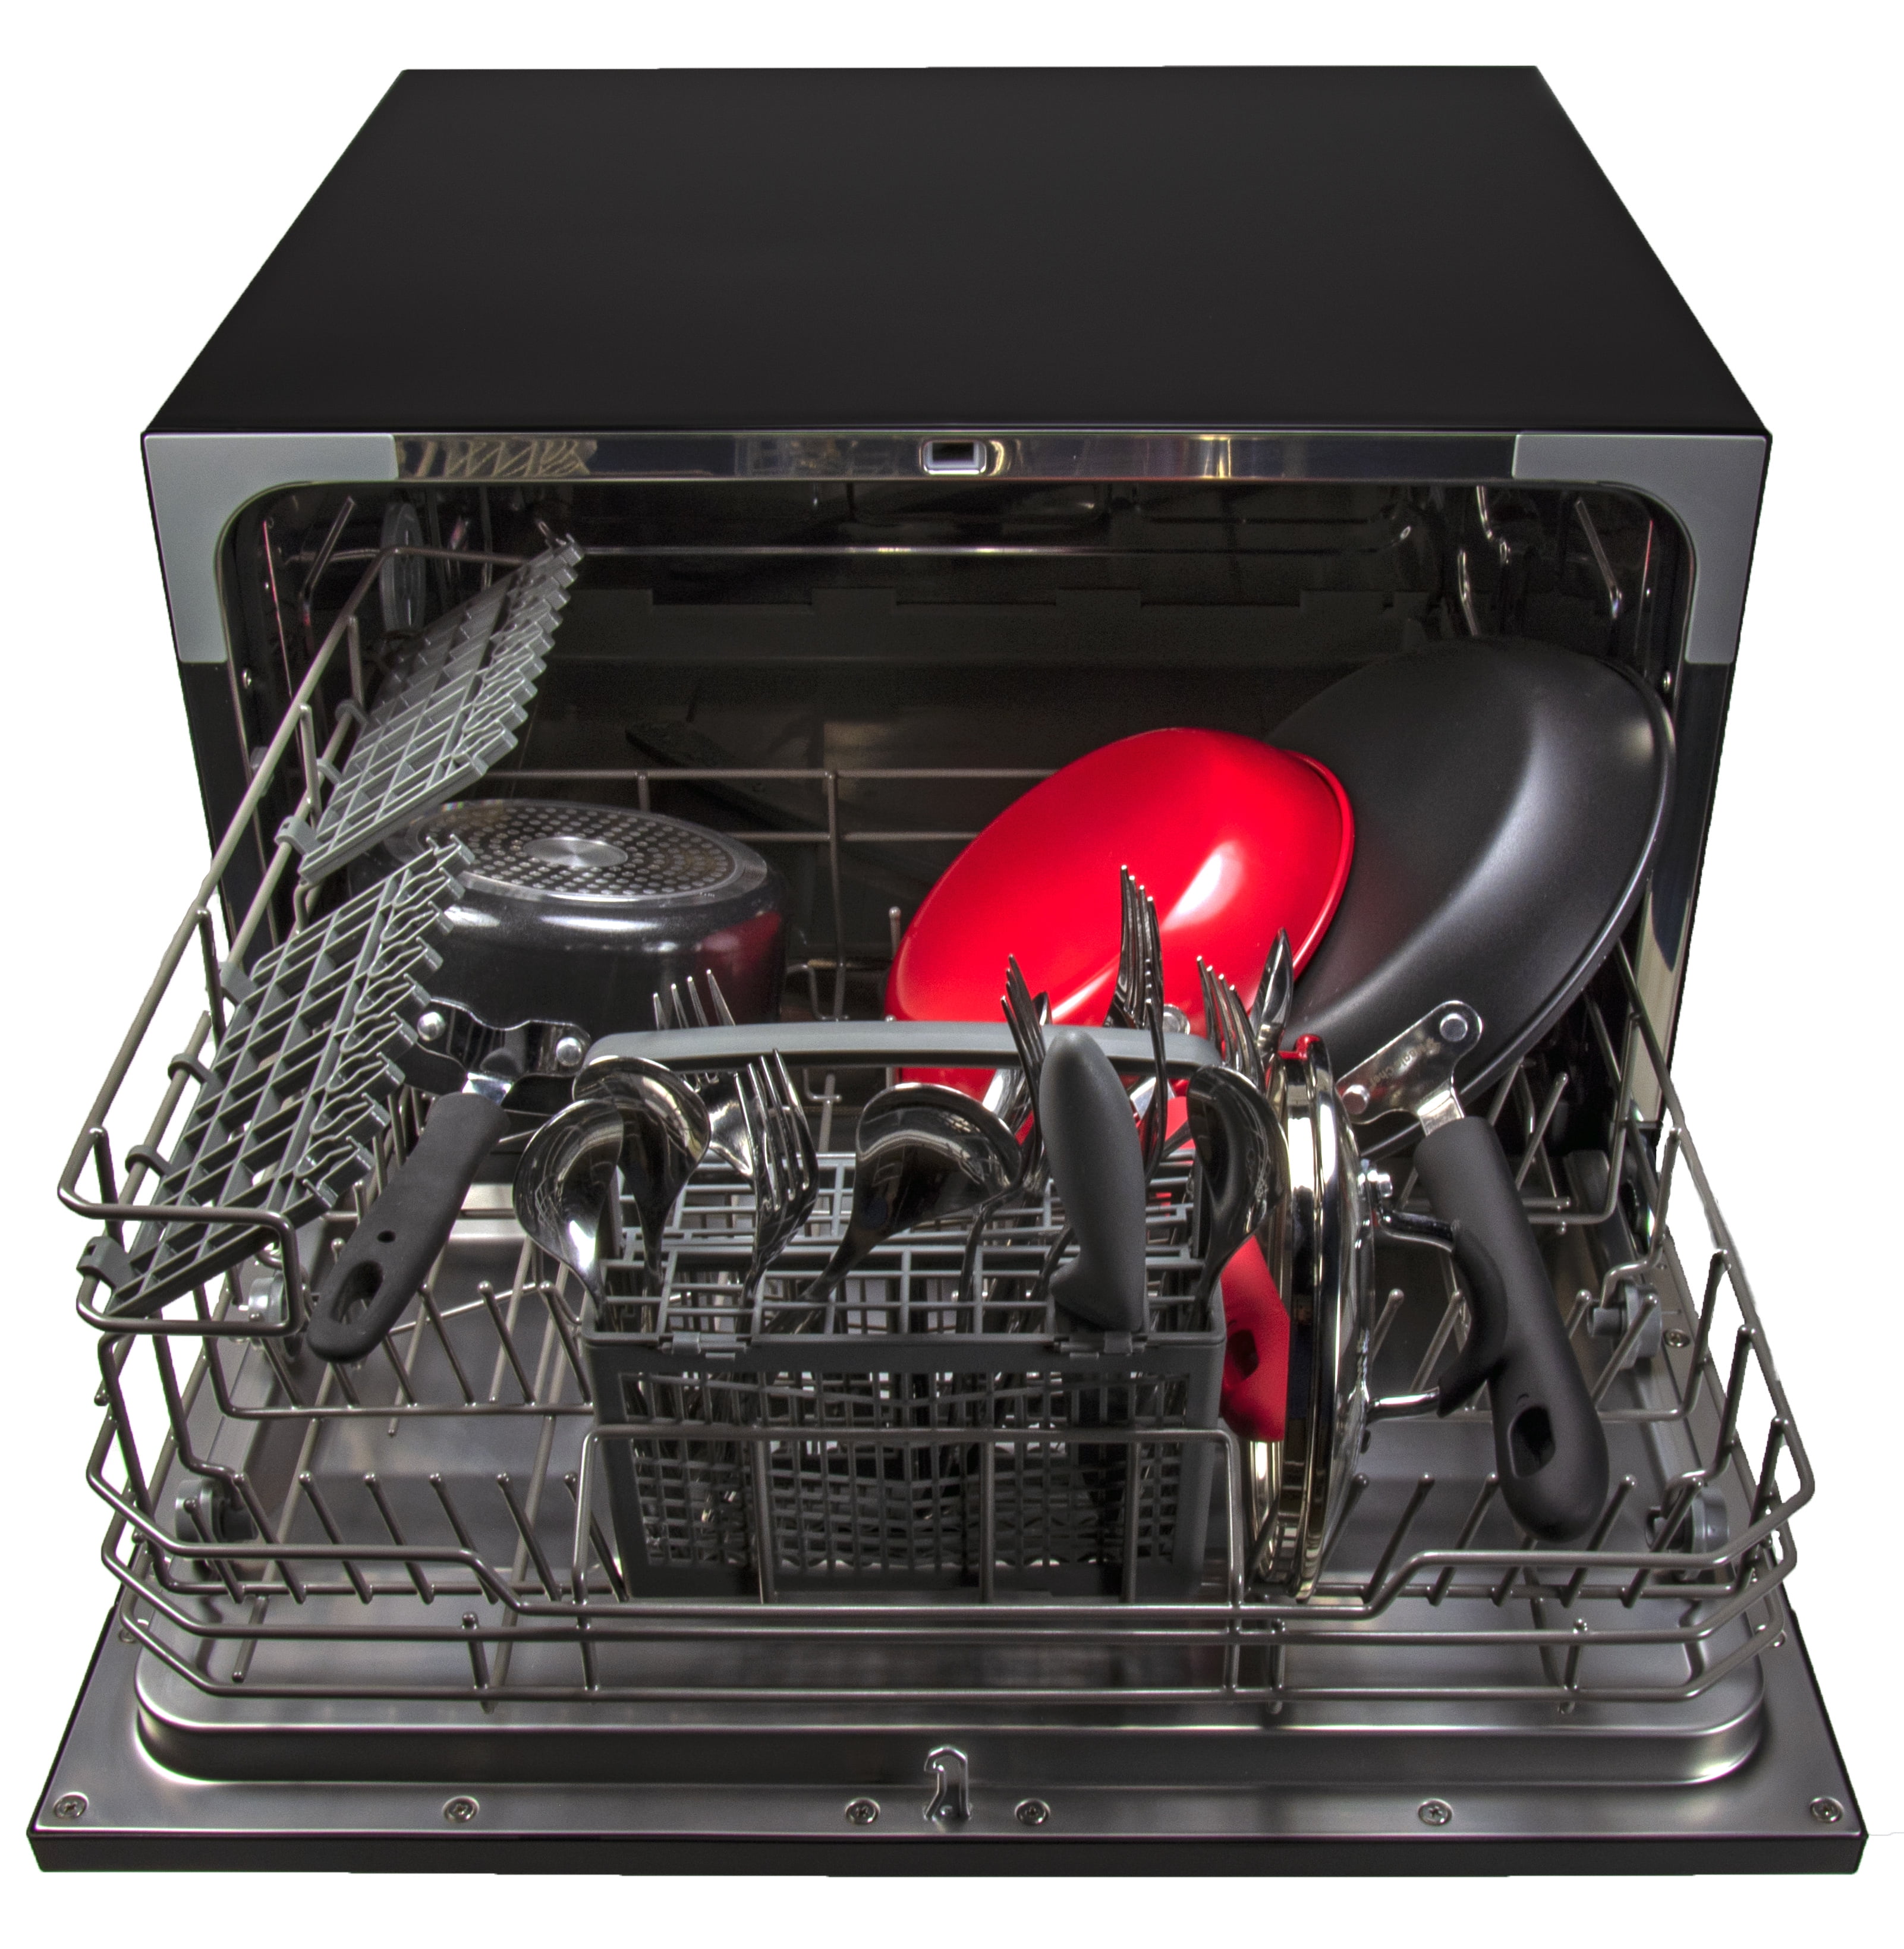 Buy Magic Chef 6-Place Setting Countertop Dishwasher